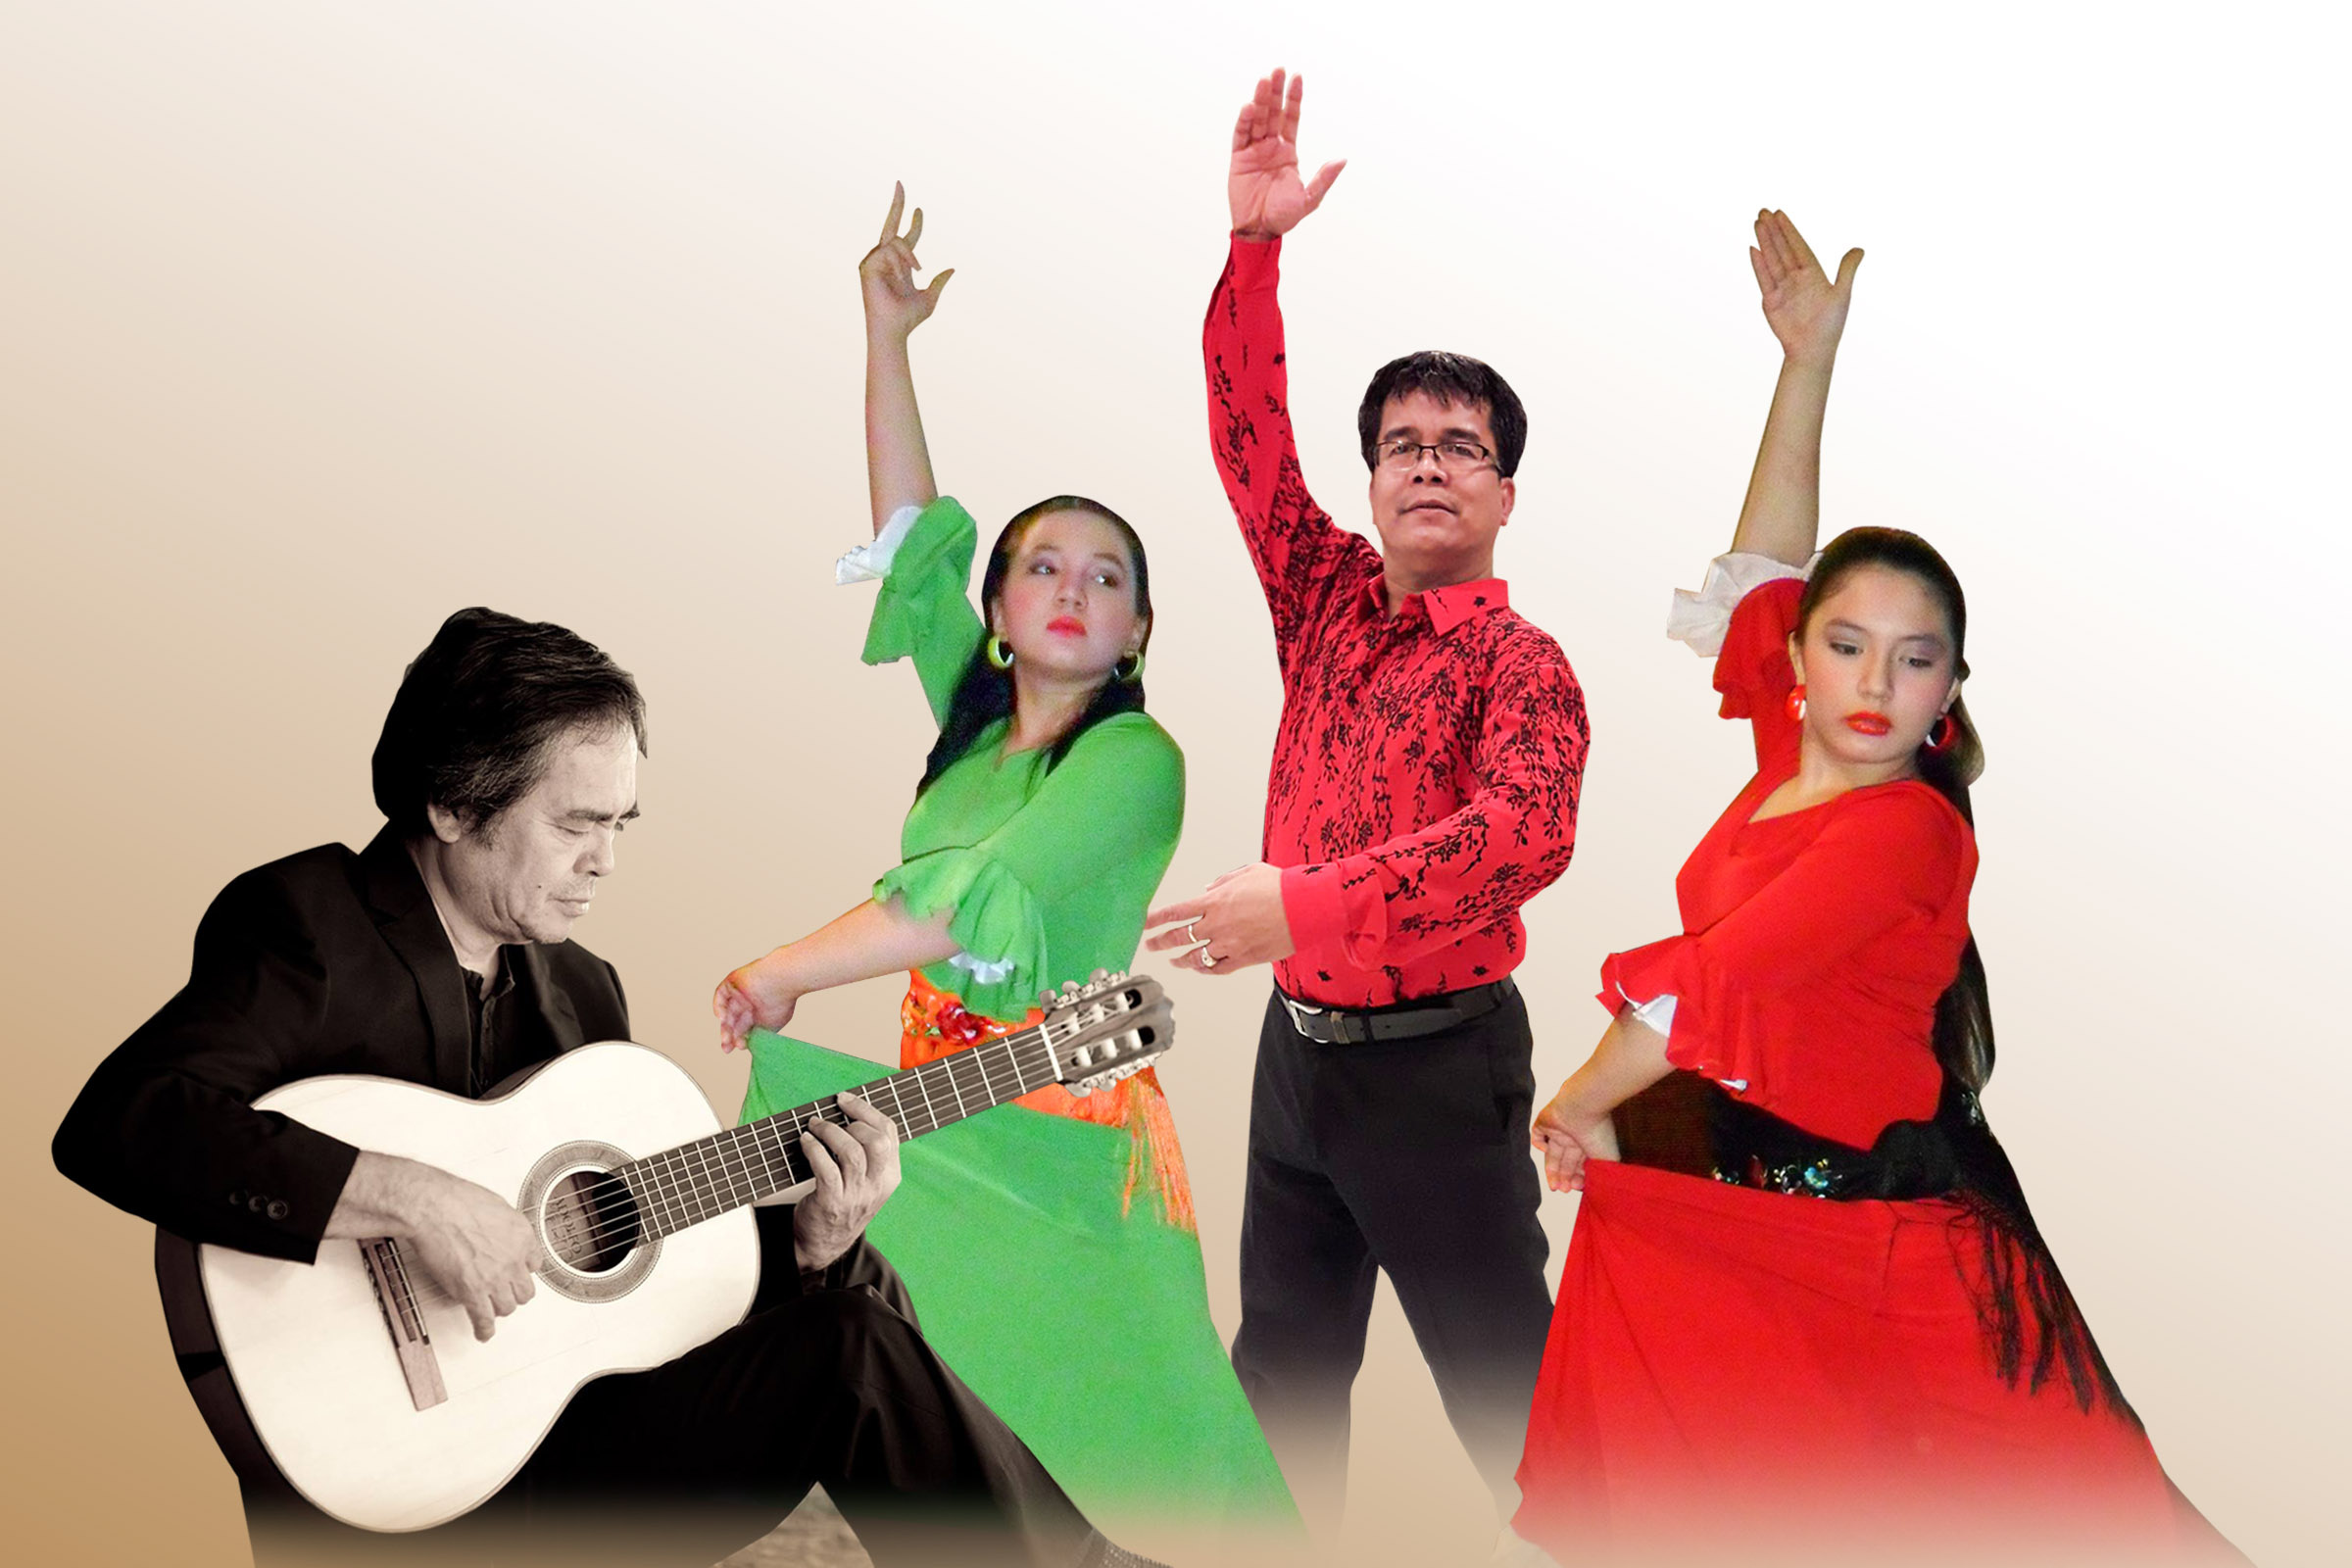 Grupo Flamenco de Señor Guillermo Gomez, Spain